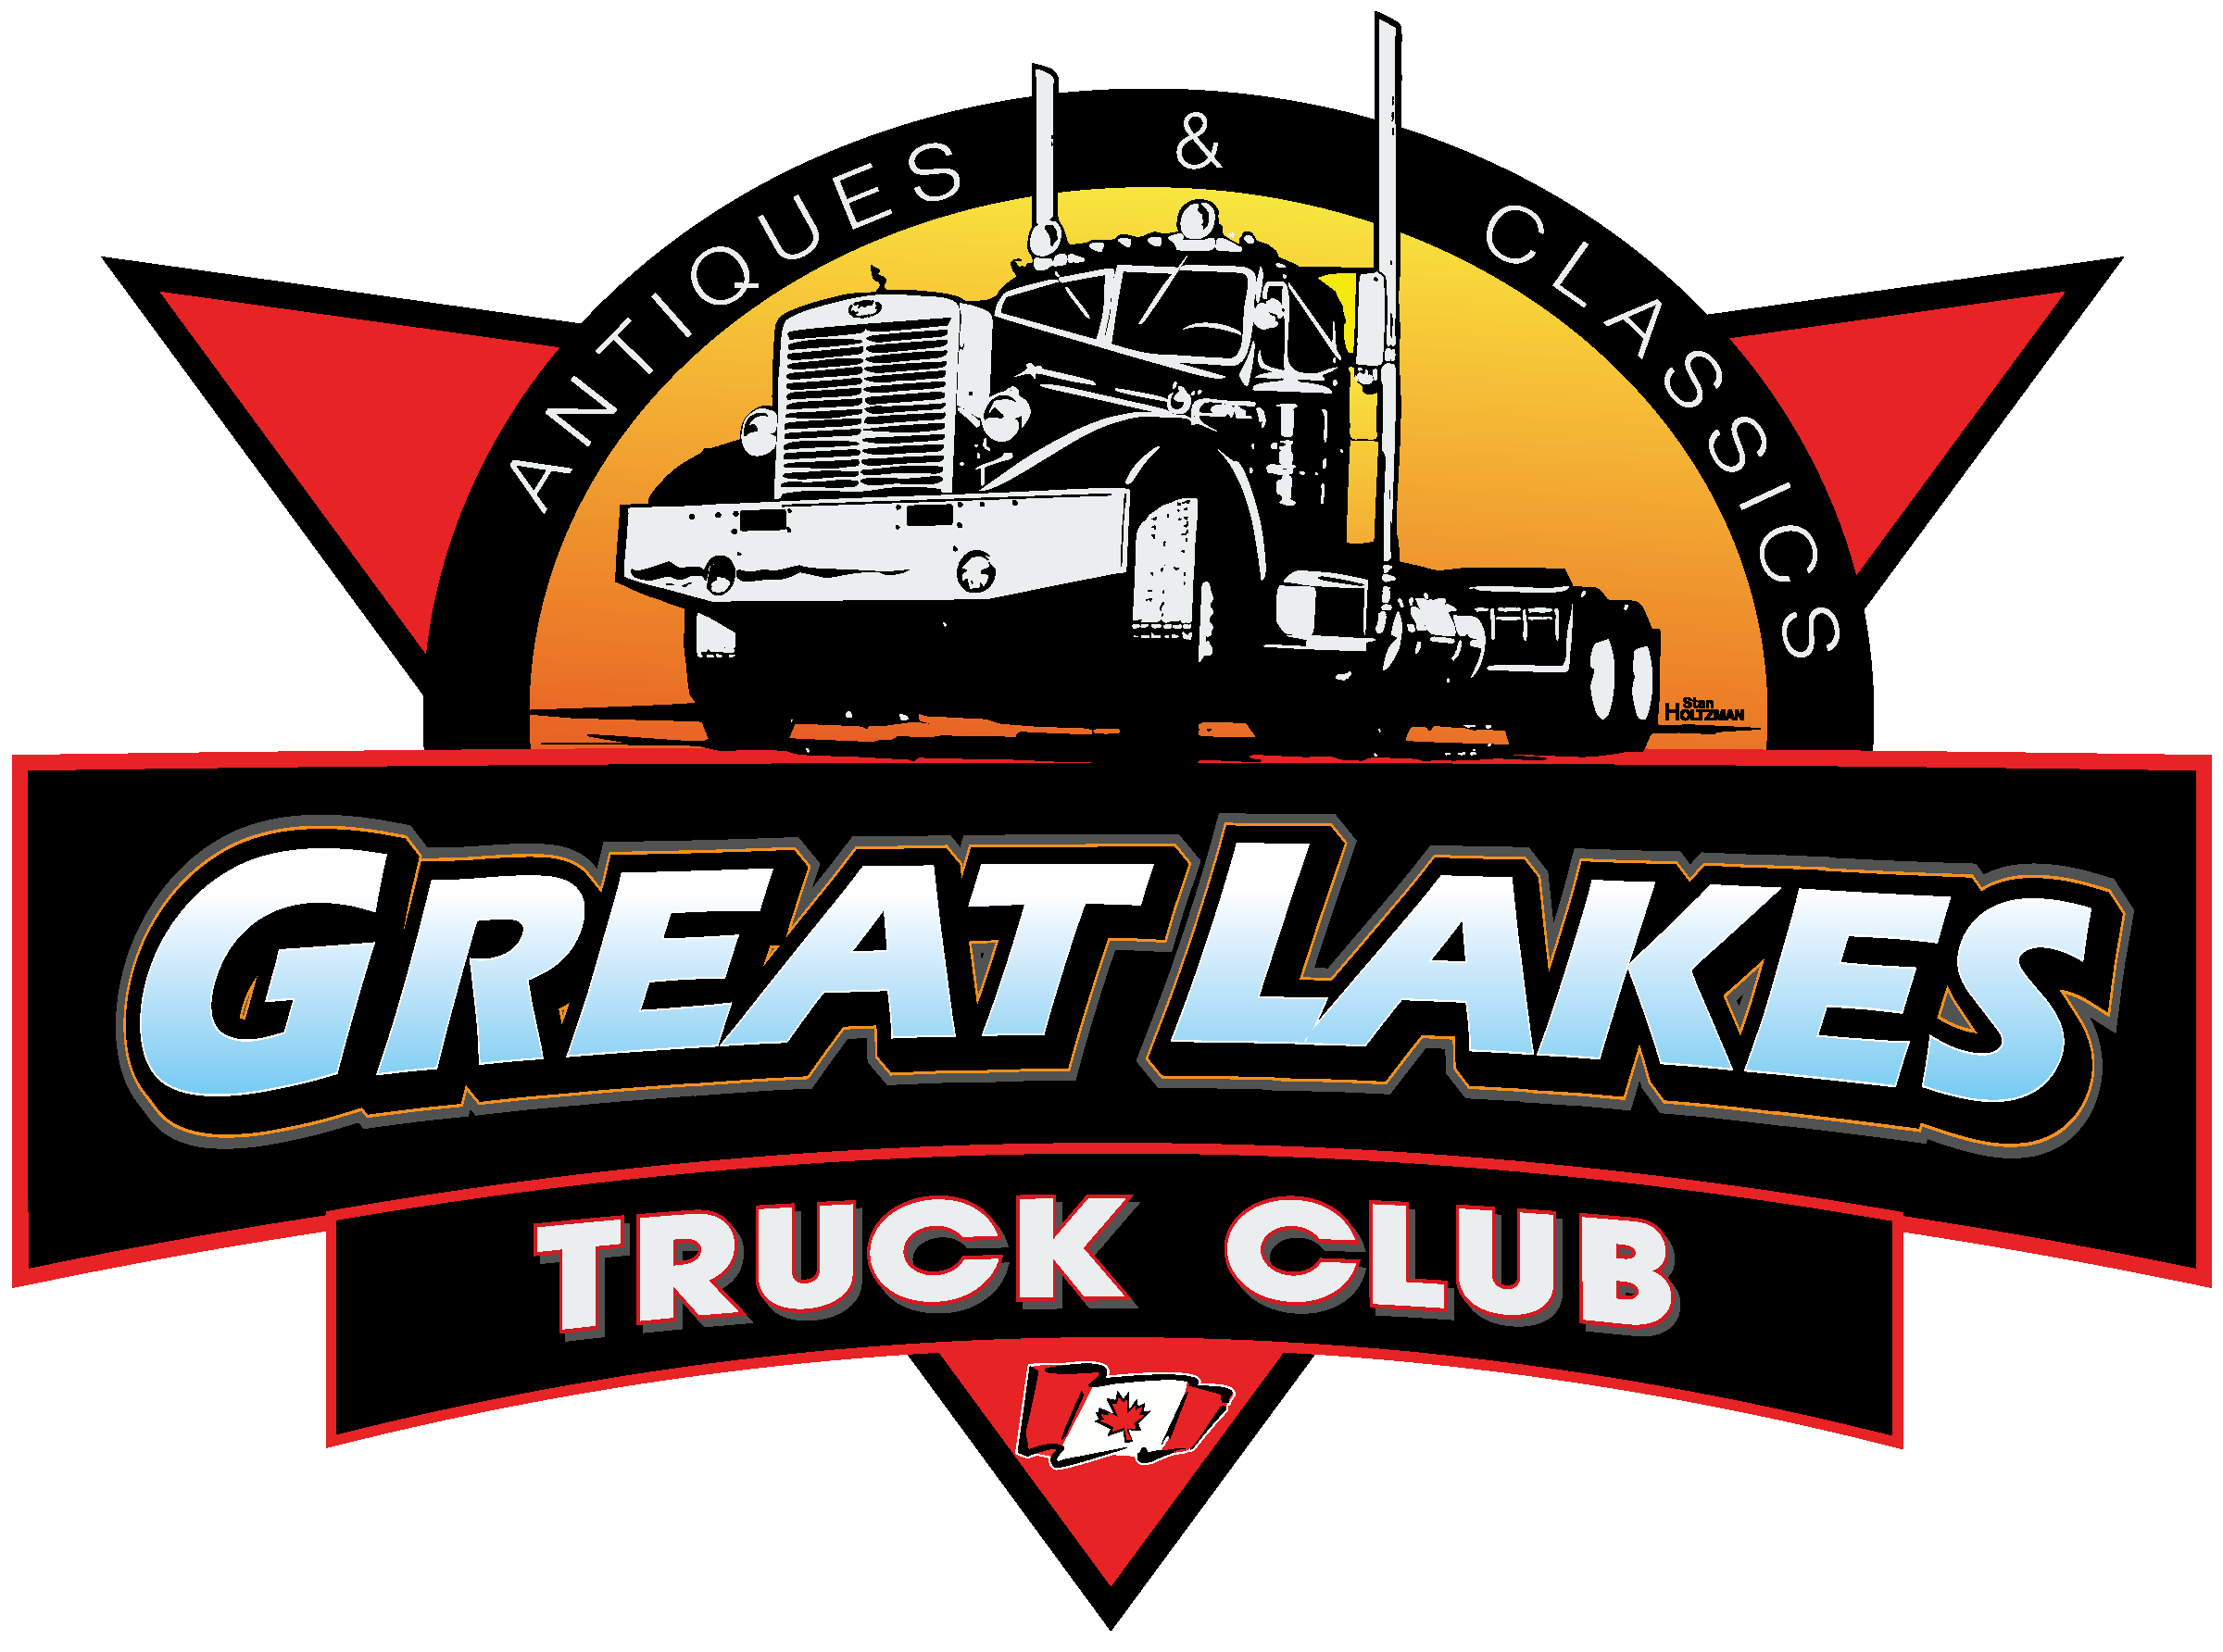 Truck Club Logo - Great Lakes Truck Club